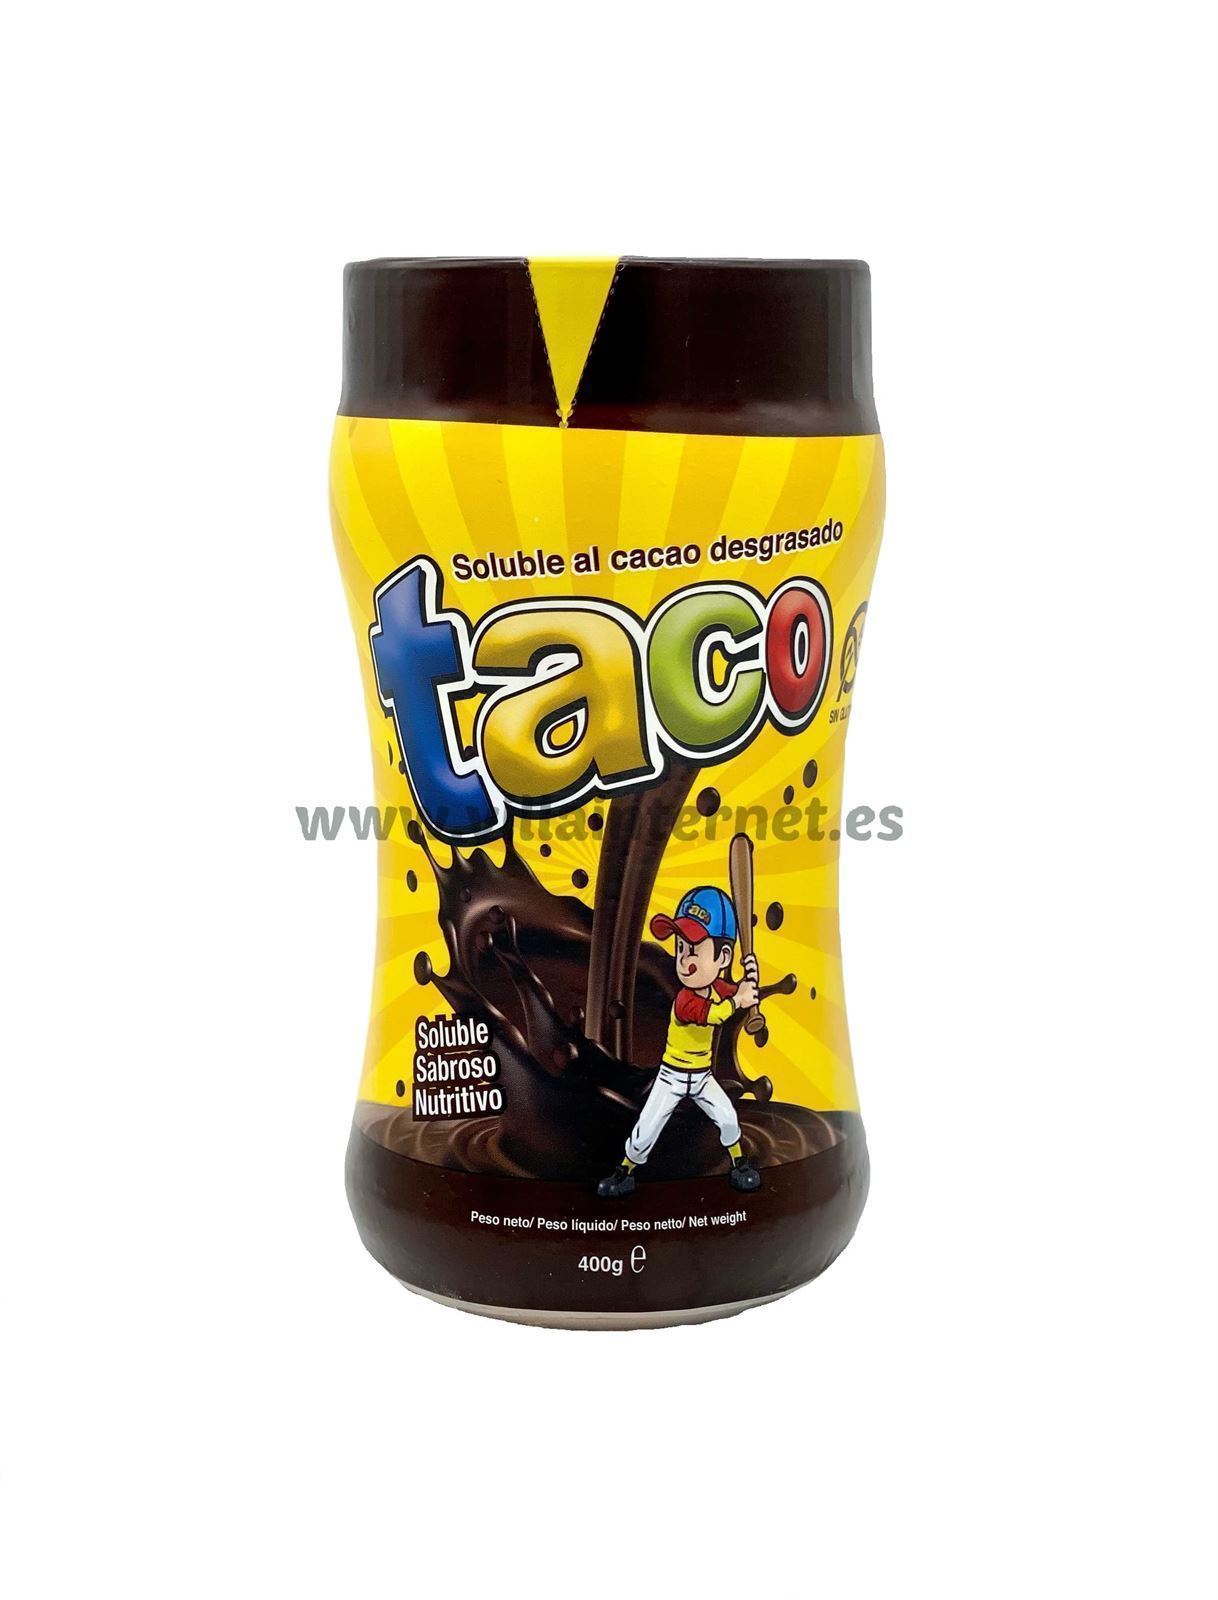 Taco sabor chocolate 400g - Imagen 1